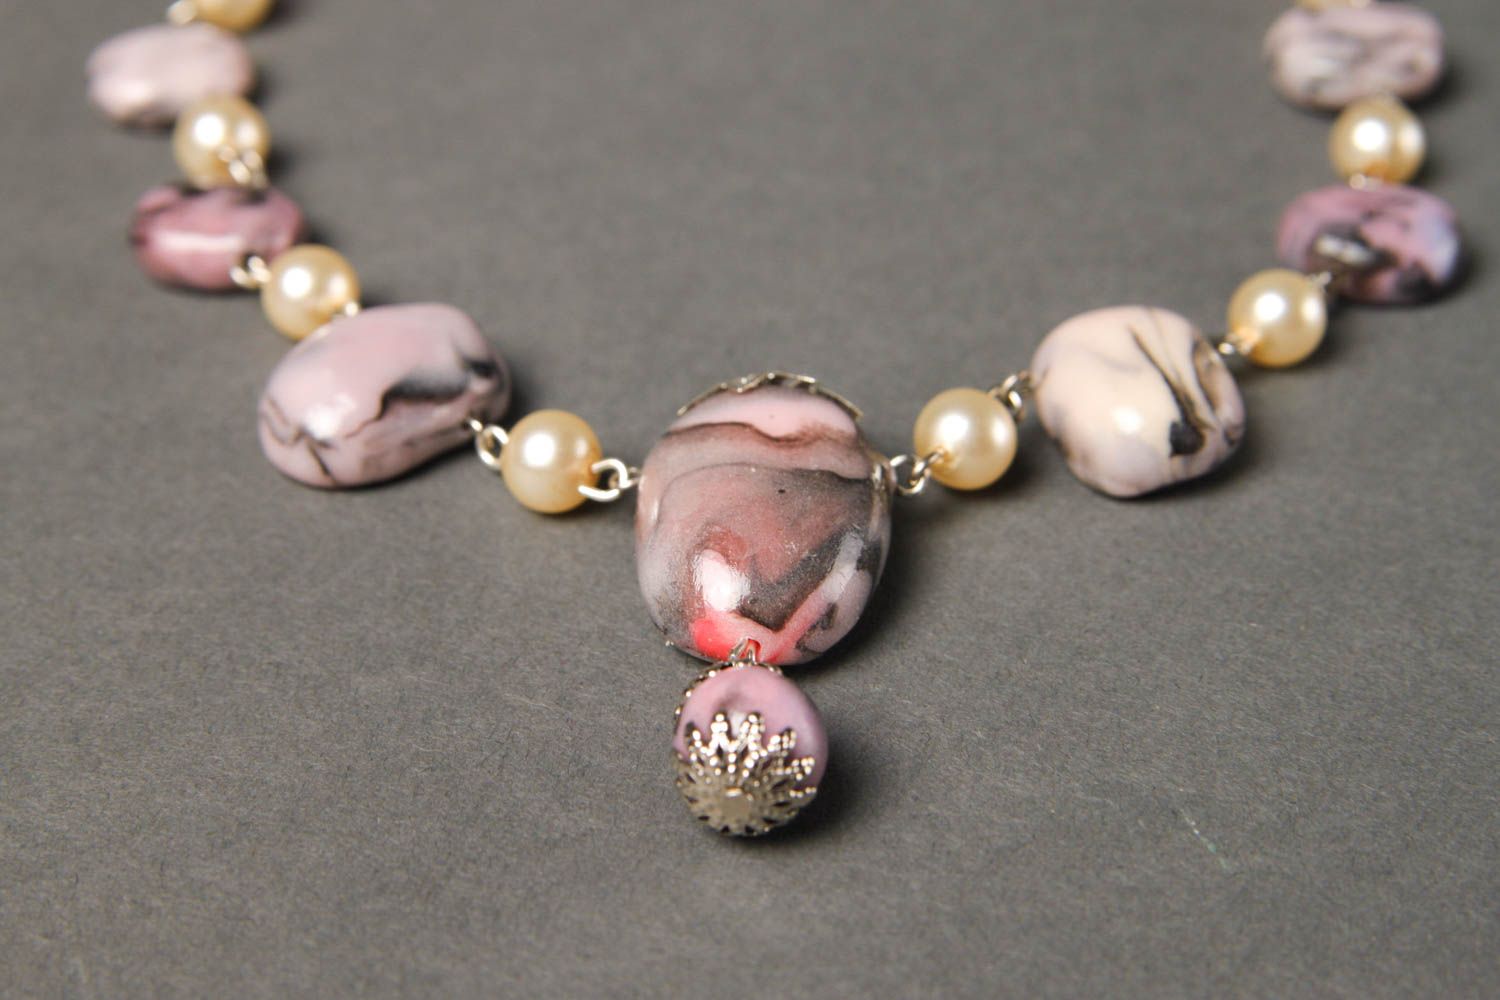 Unusual handmade plastic necklace bracelet designs cool jewelry set ideas photo 3